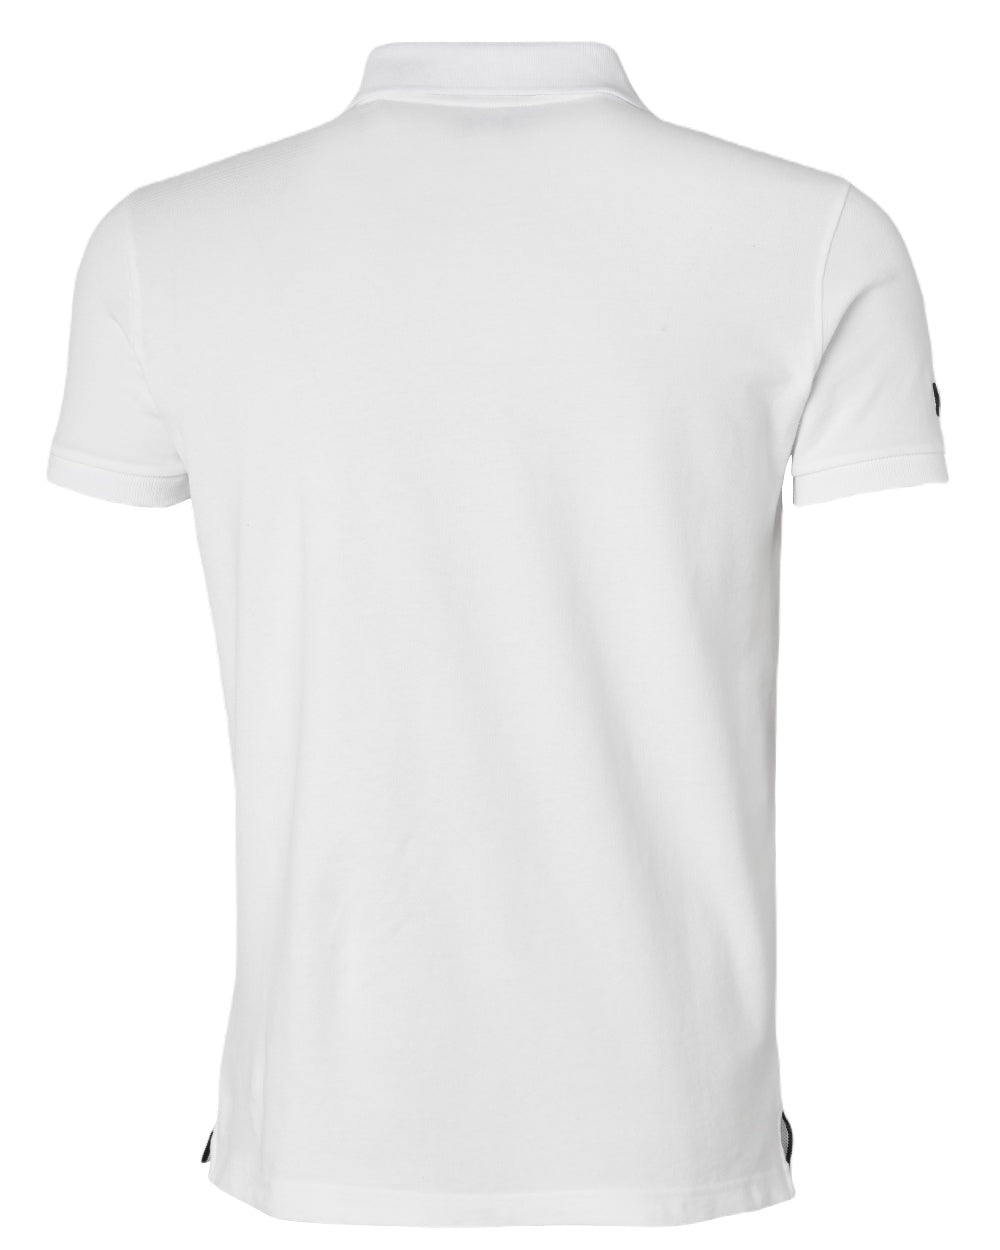 Helly Hansen Crew Polo Shirt In White 